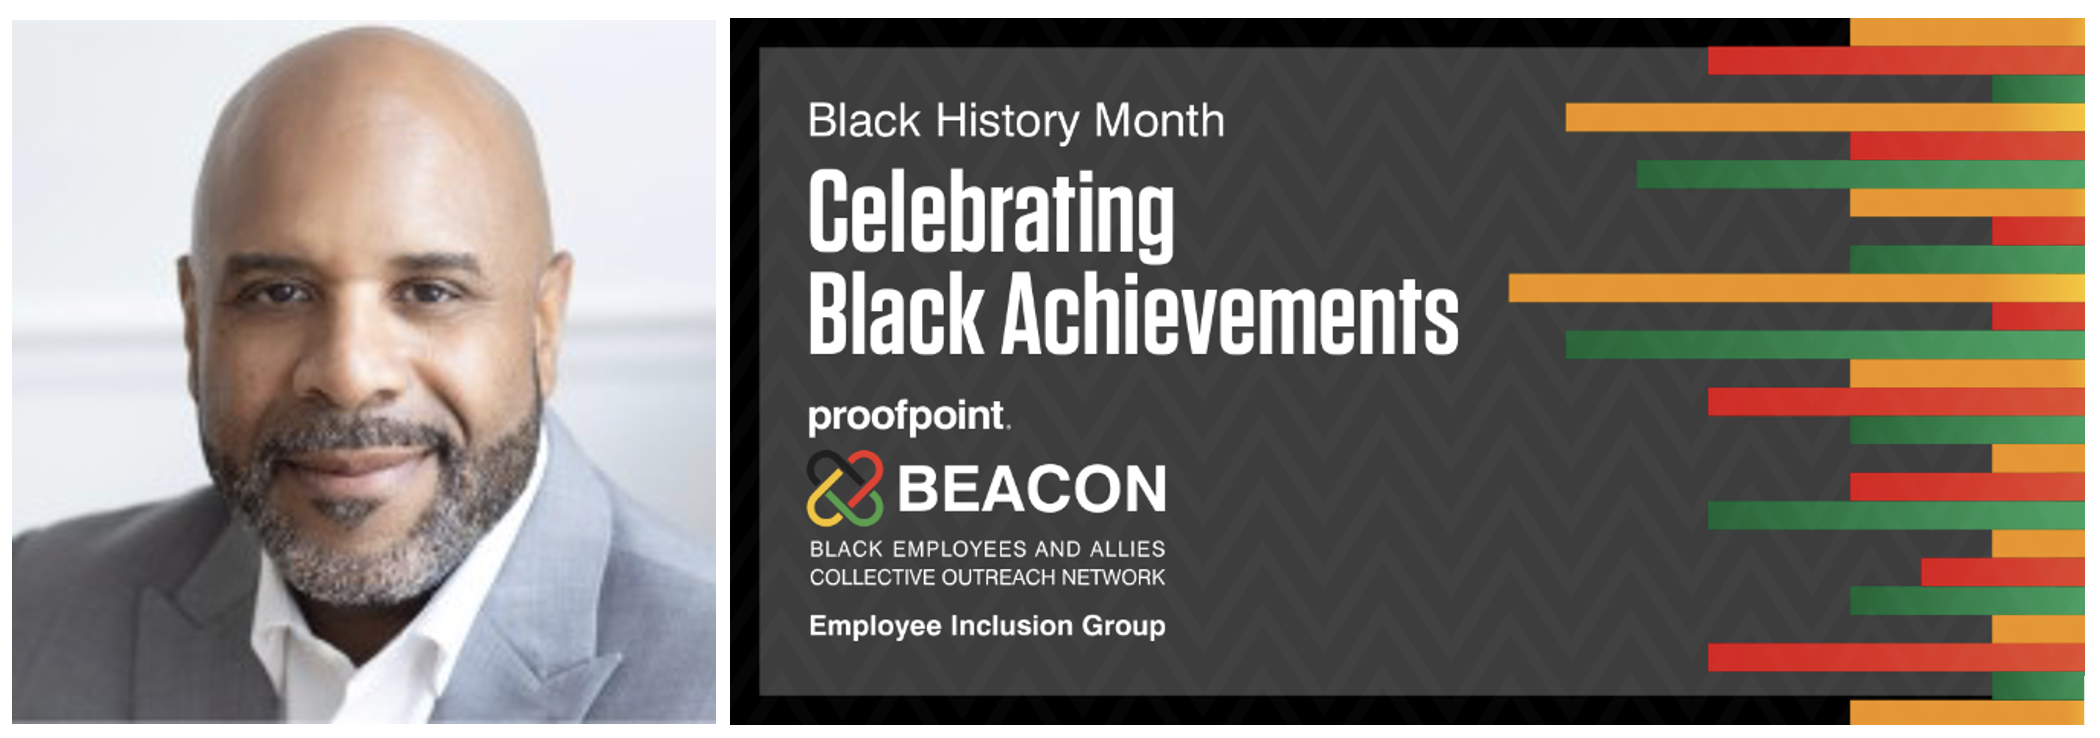 Black History Month 